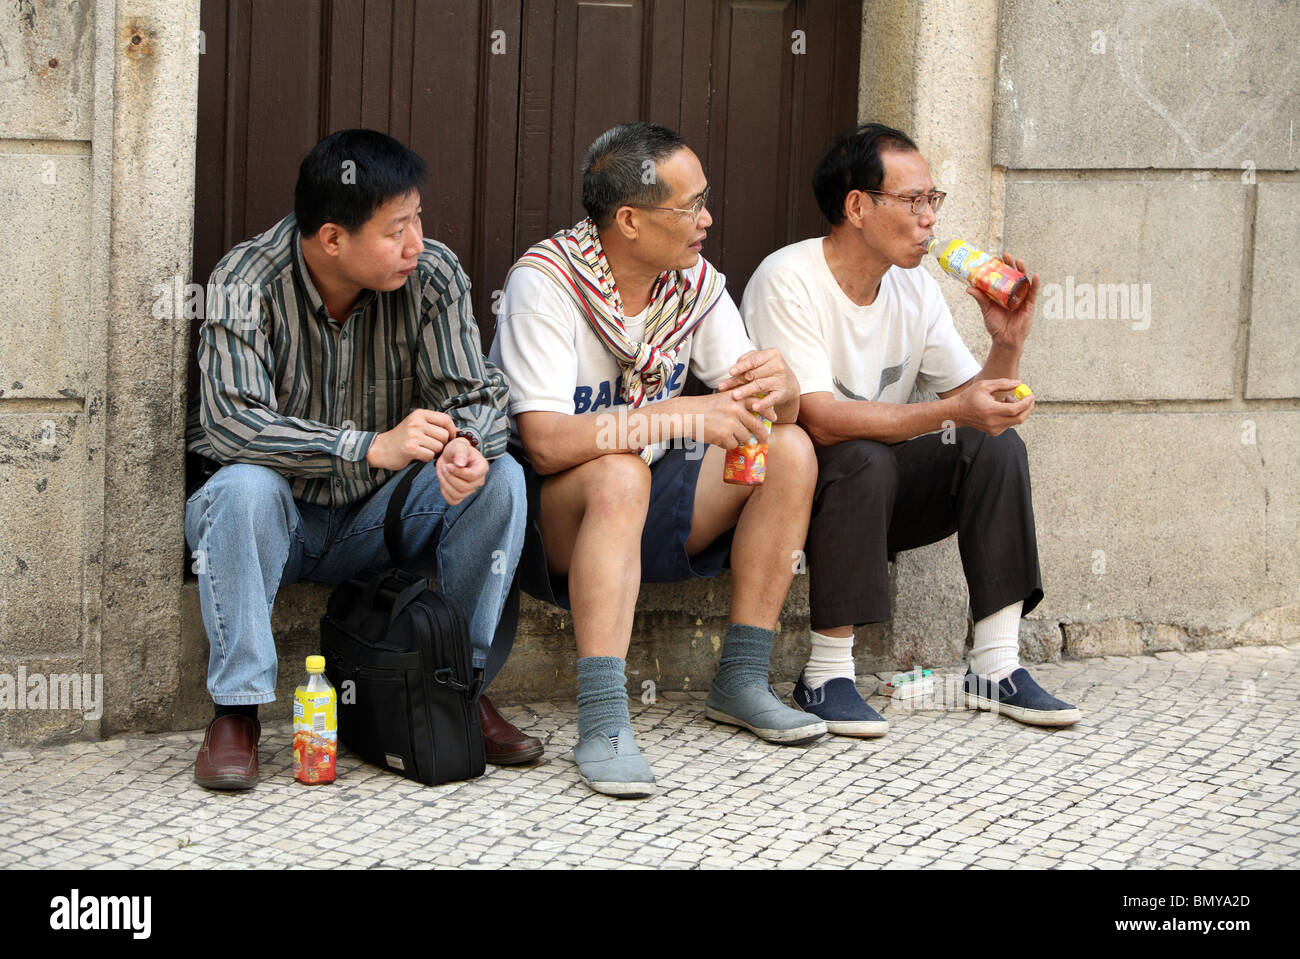 Men sitting on a threshold, Macao, China Stock Photo